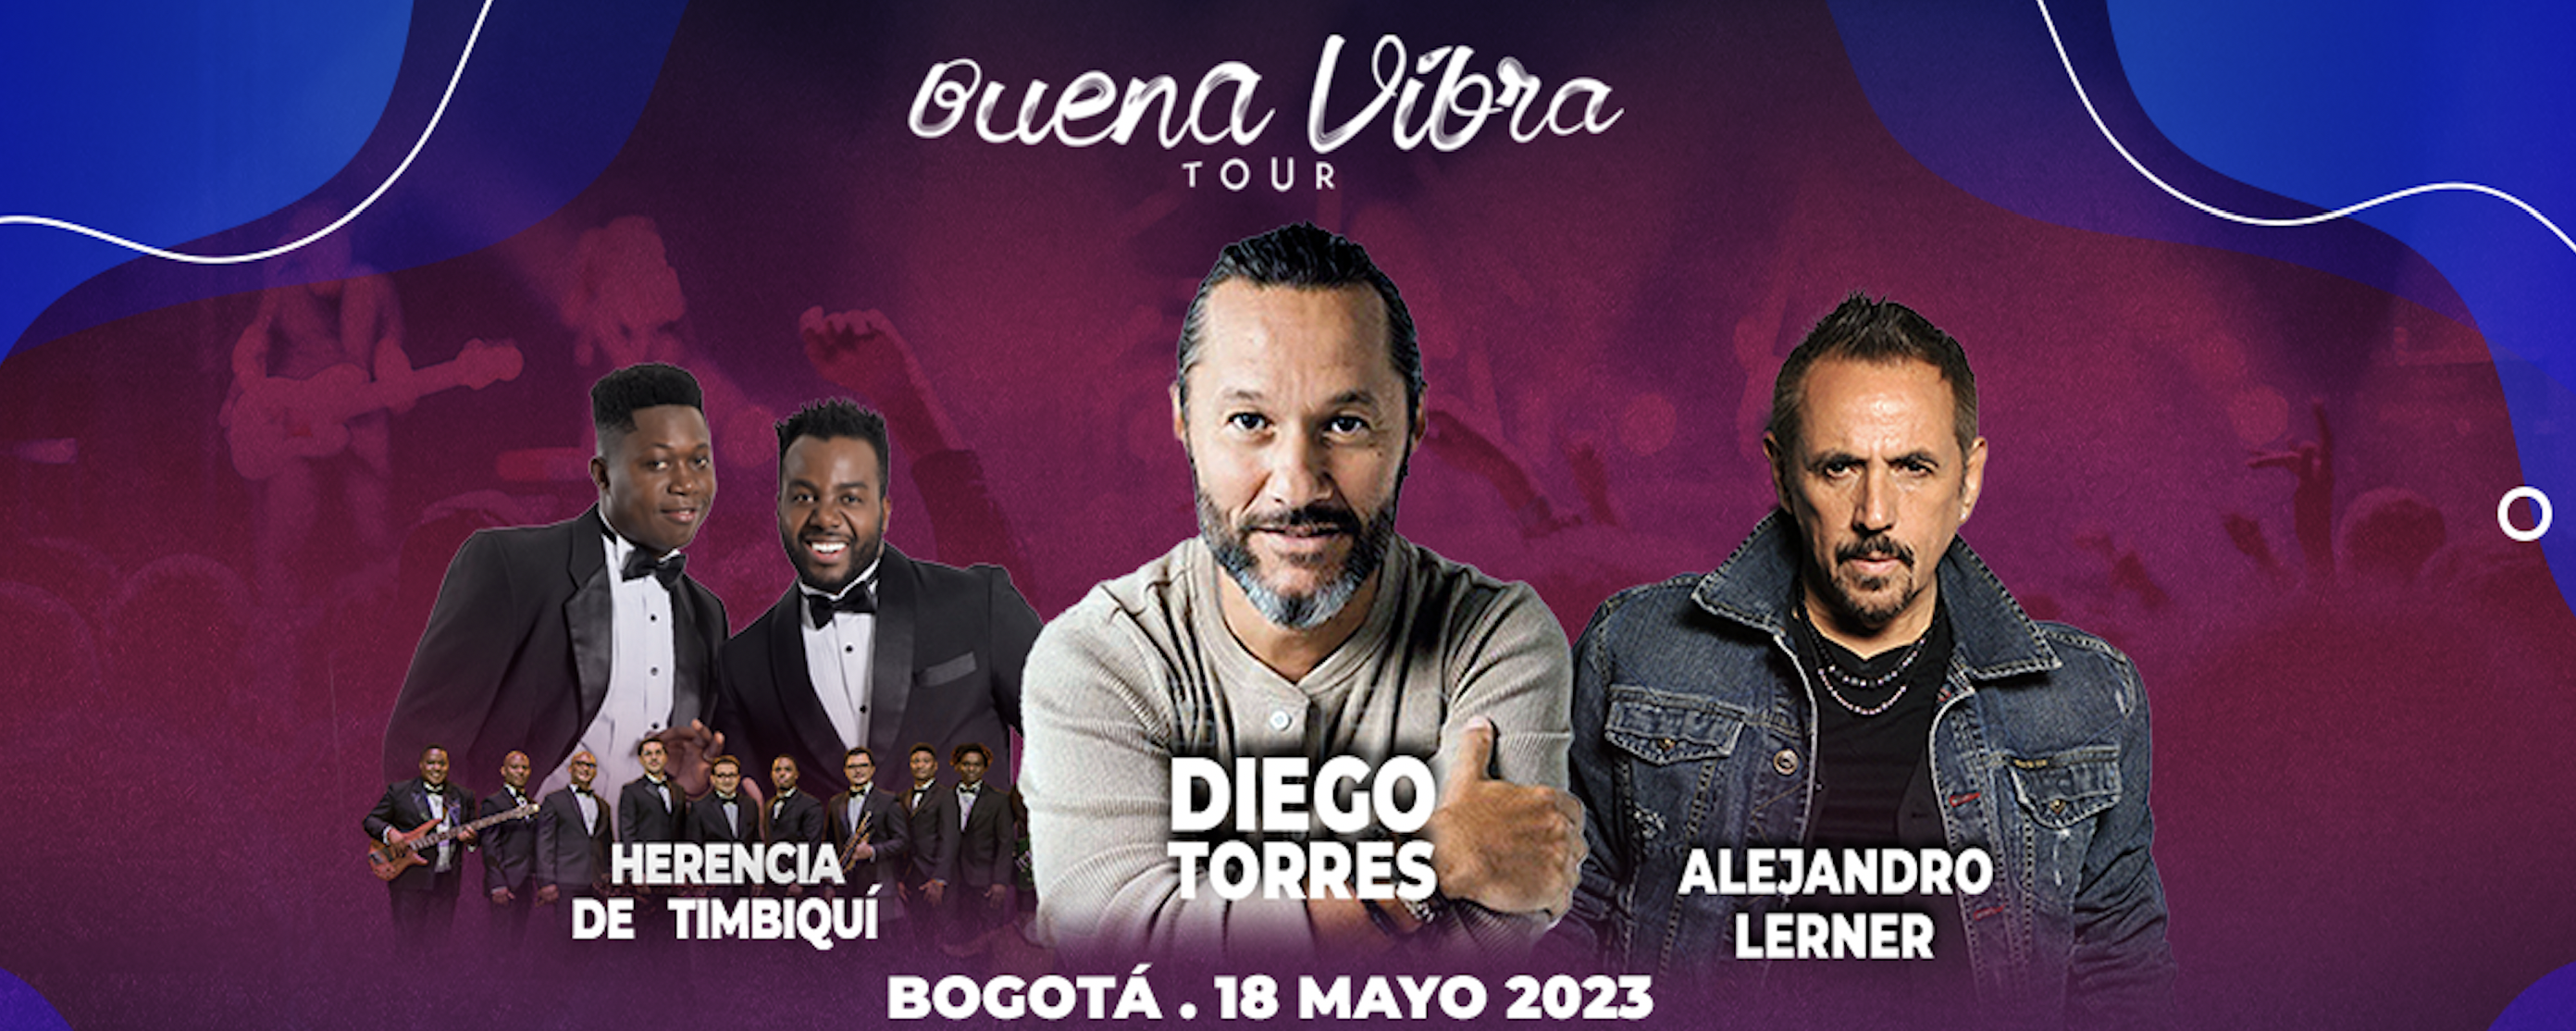 “Buena Vibra Tour” ya tiene fecha en Bogotá